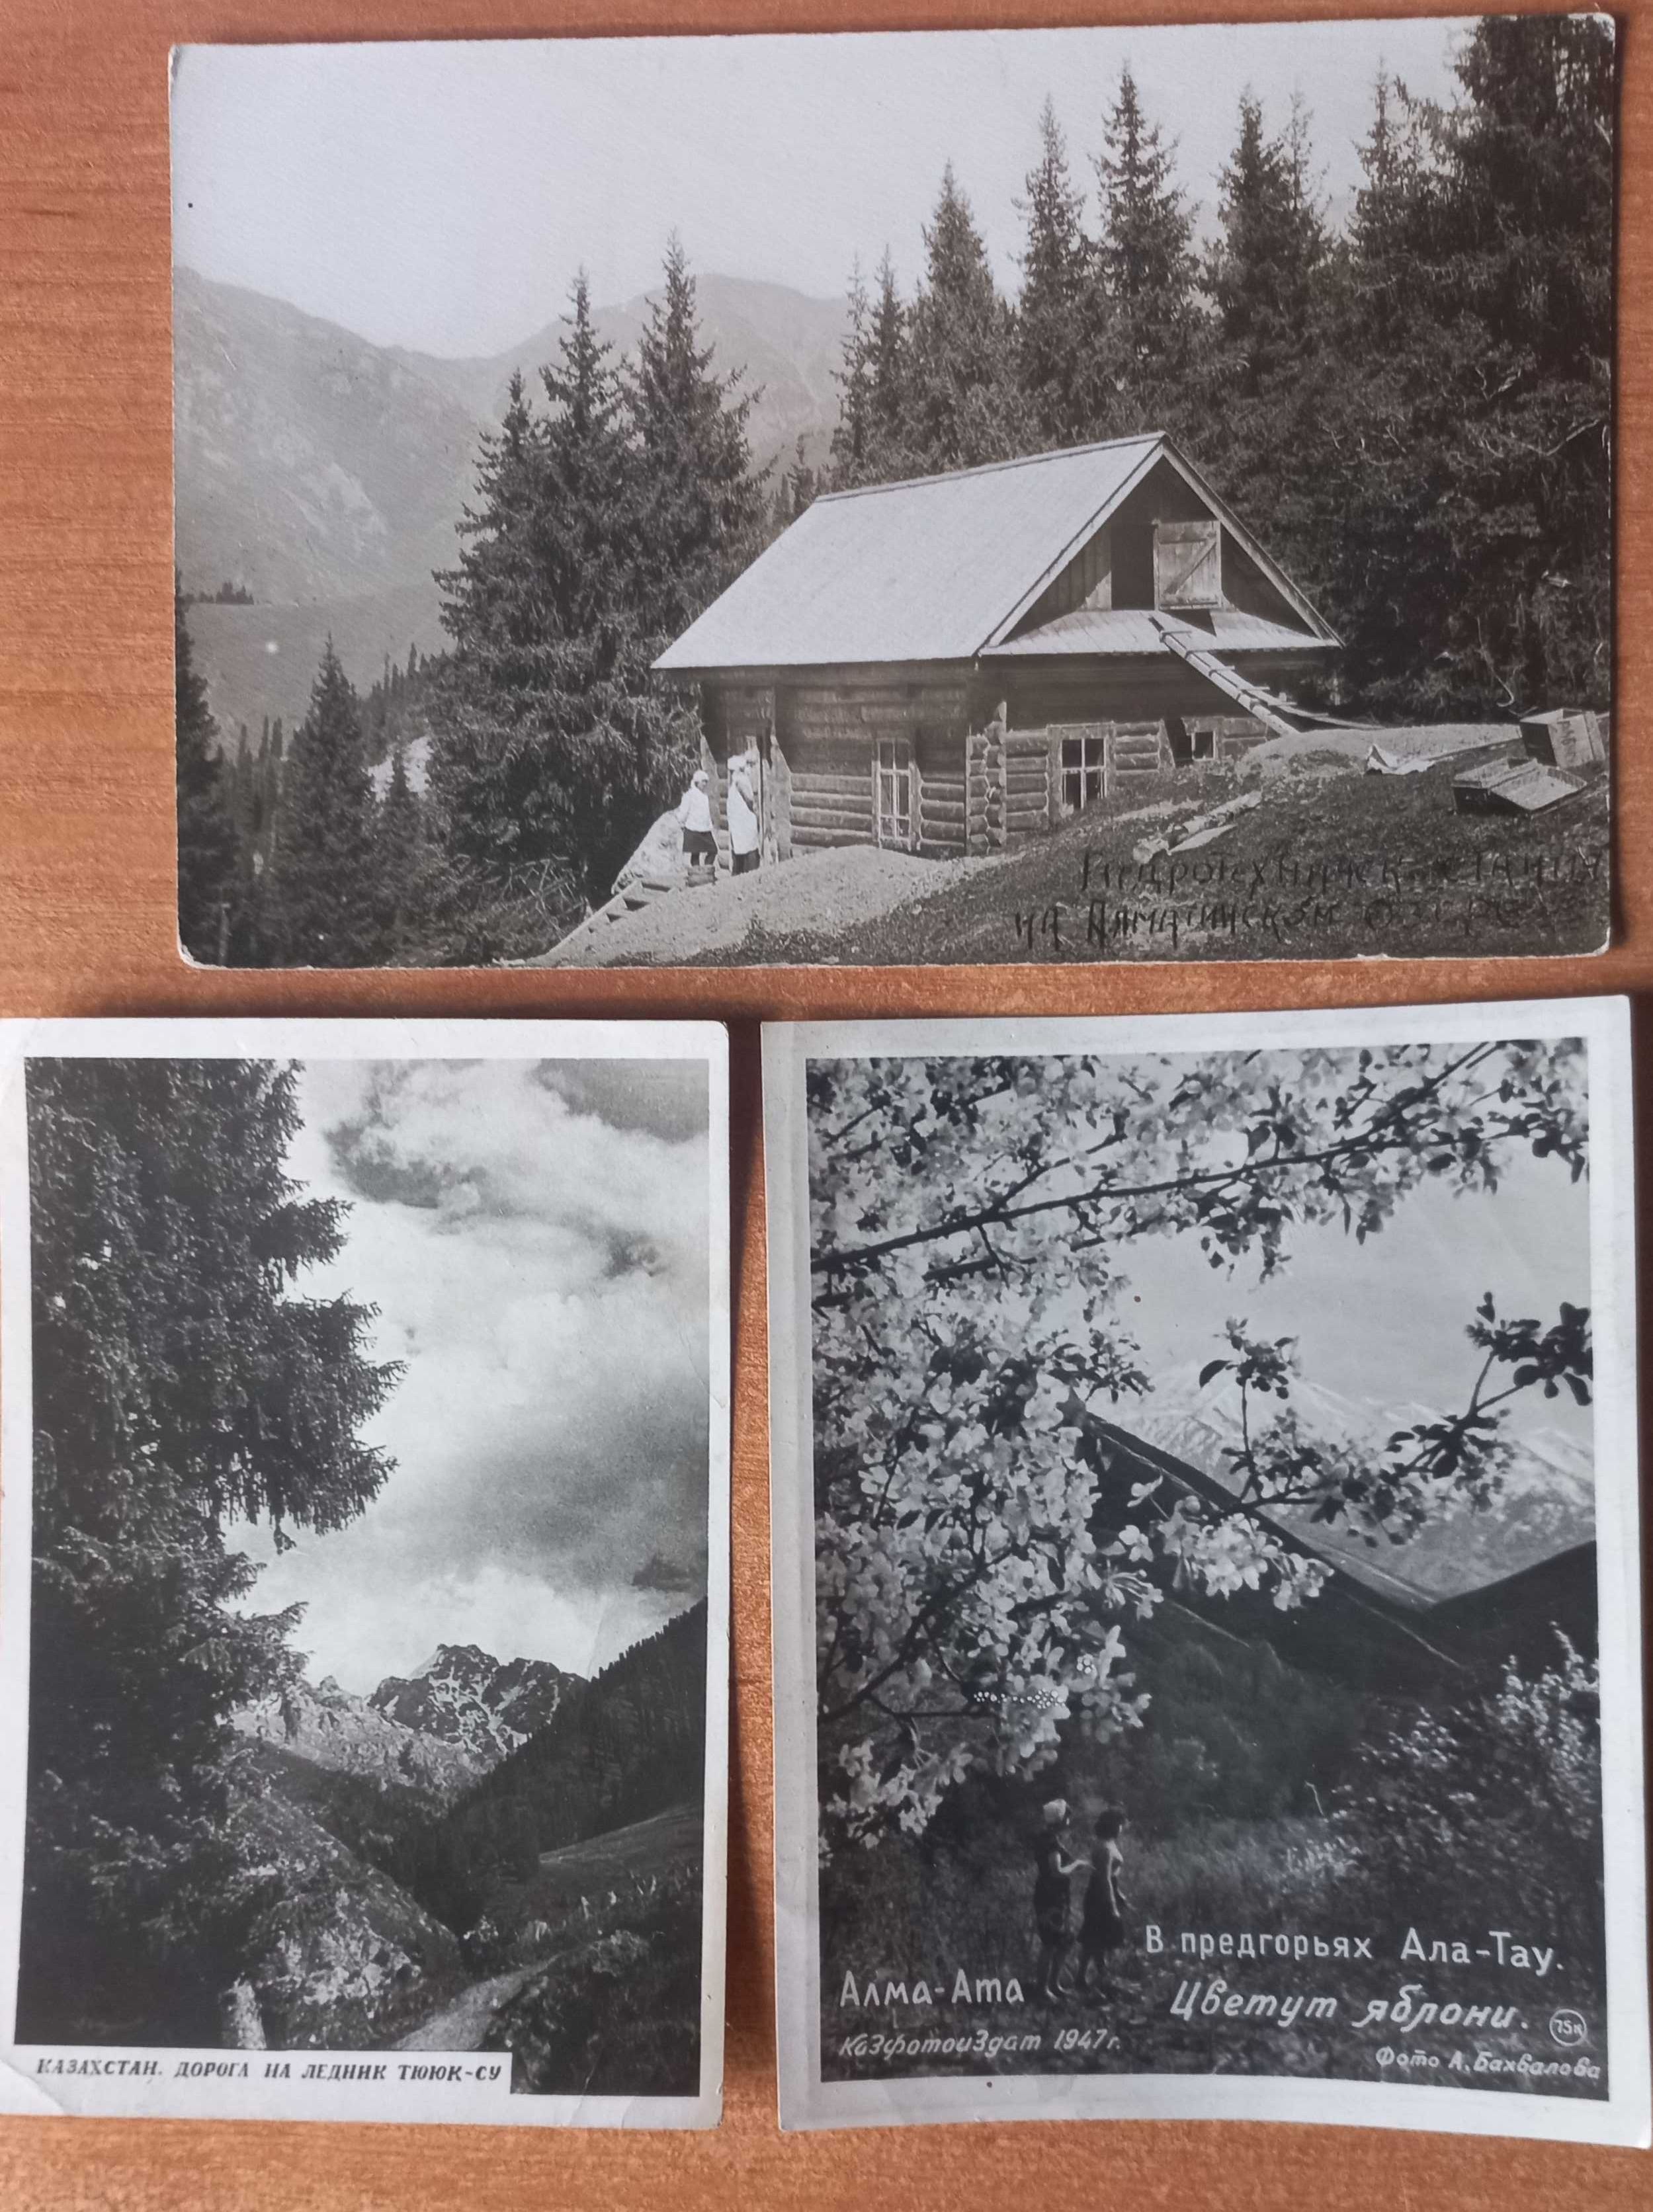 Ретро открытки с видами Алма-Атинских гор. 30и 40-е годы.